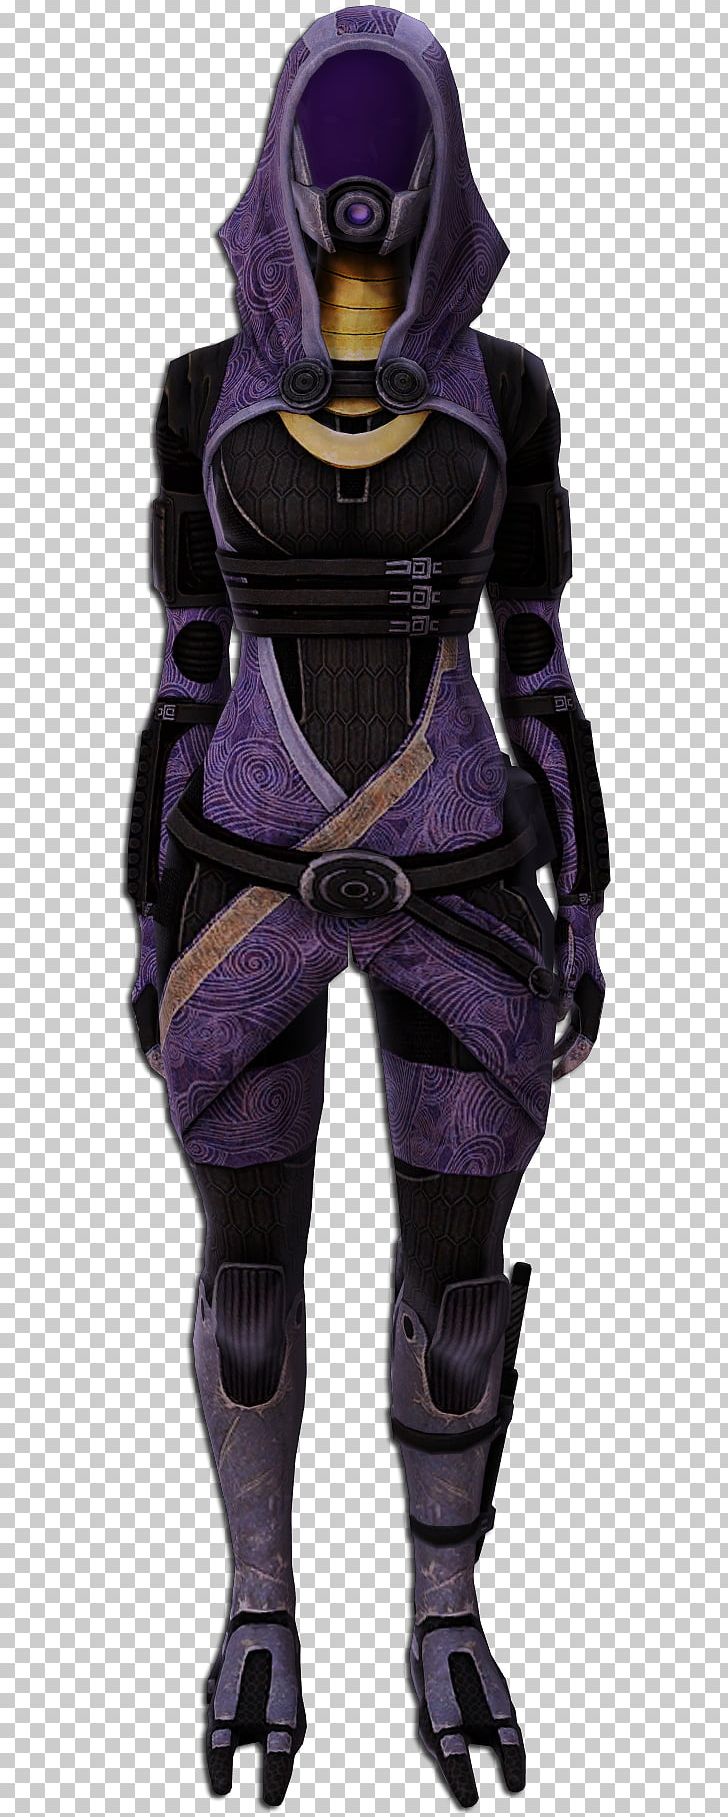 Mass Effect 2 Costume Design Tali'Zorah Character PNG, Clipart, Character, Costume Design, Mass Effect 2 Free PNG Download